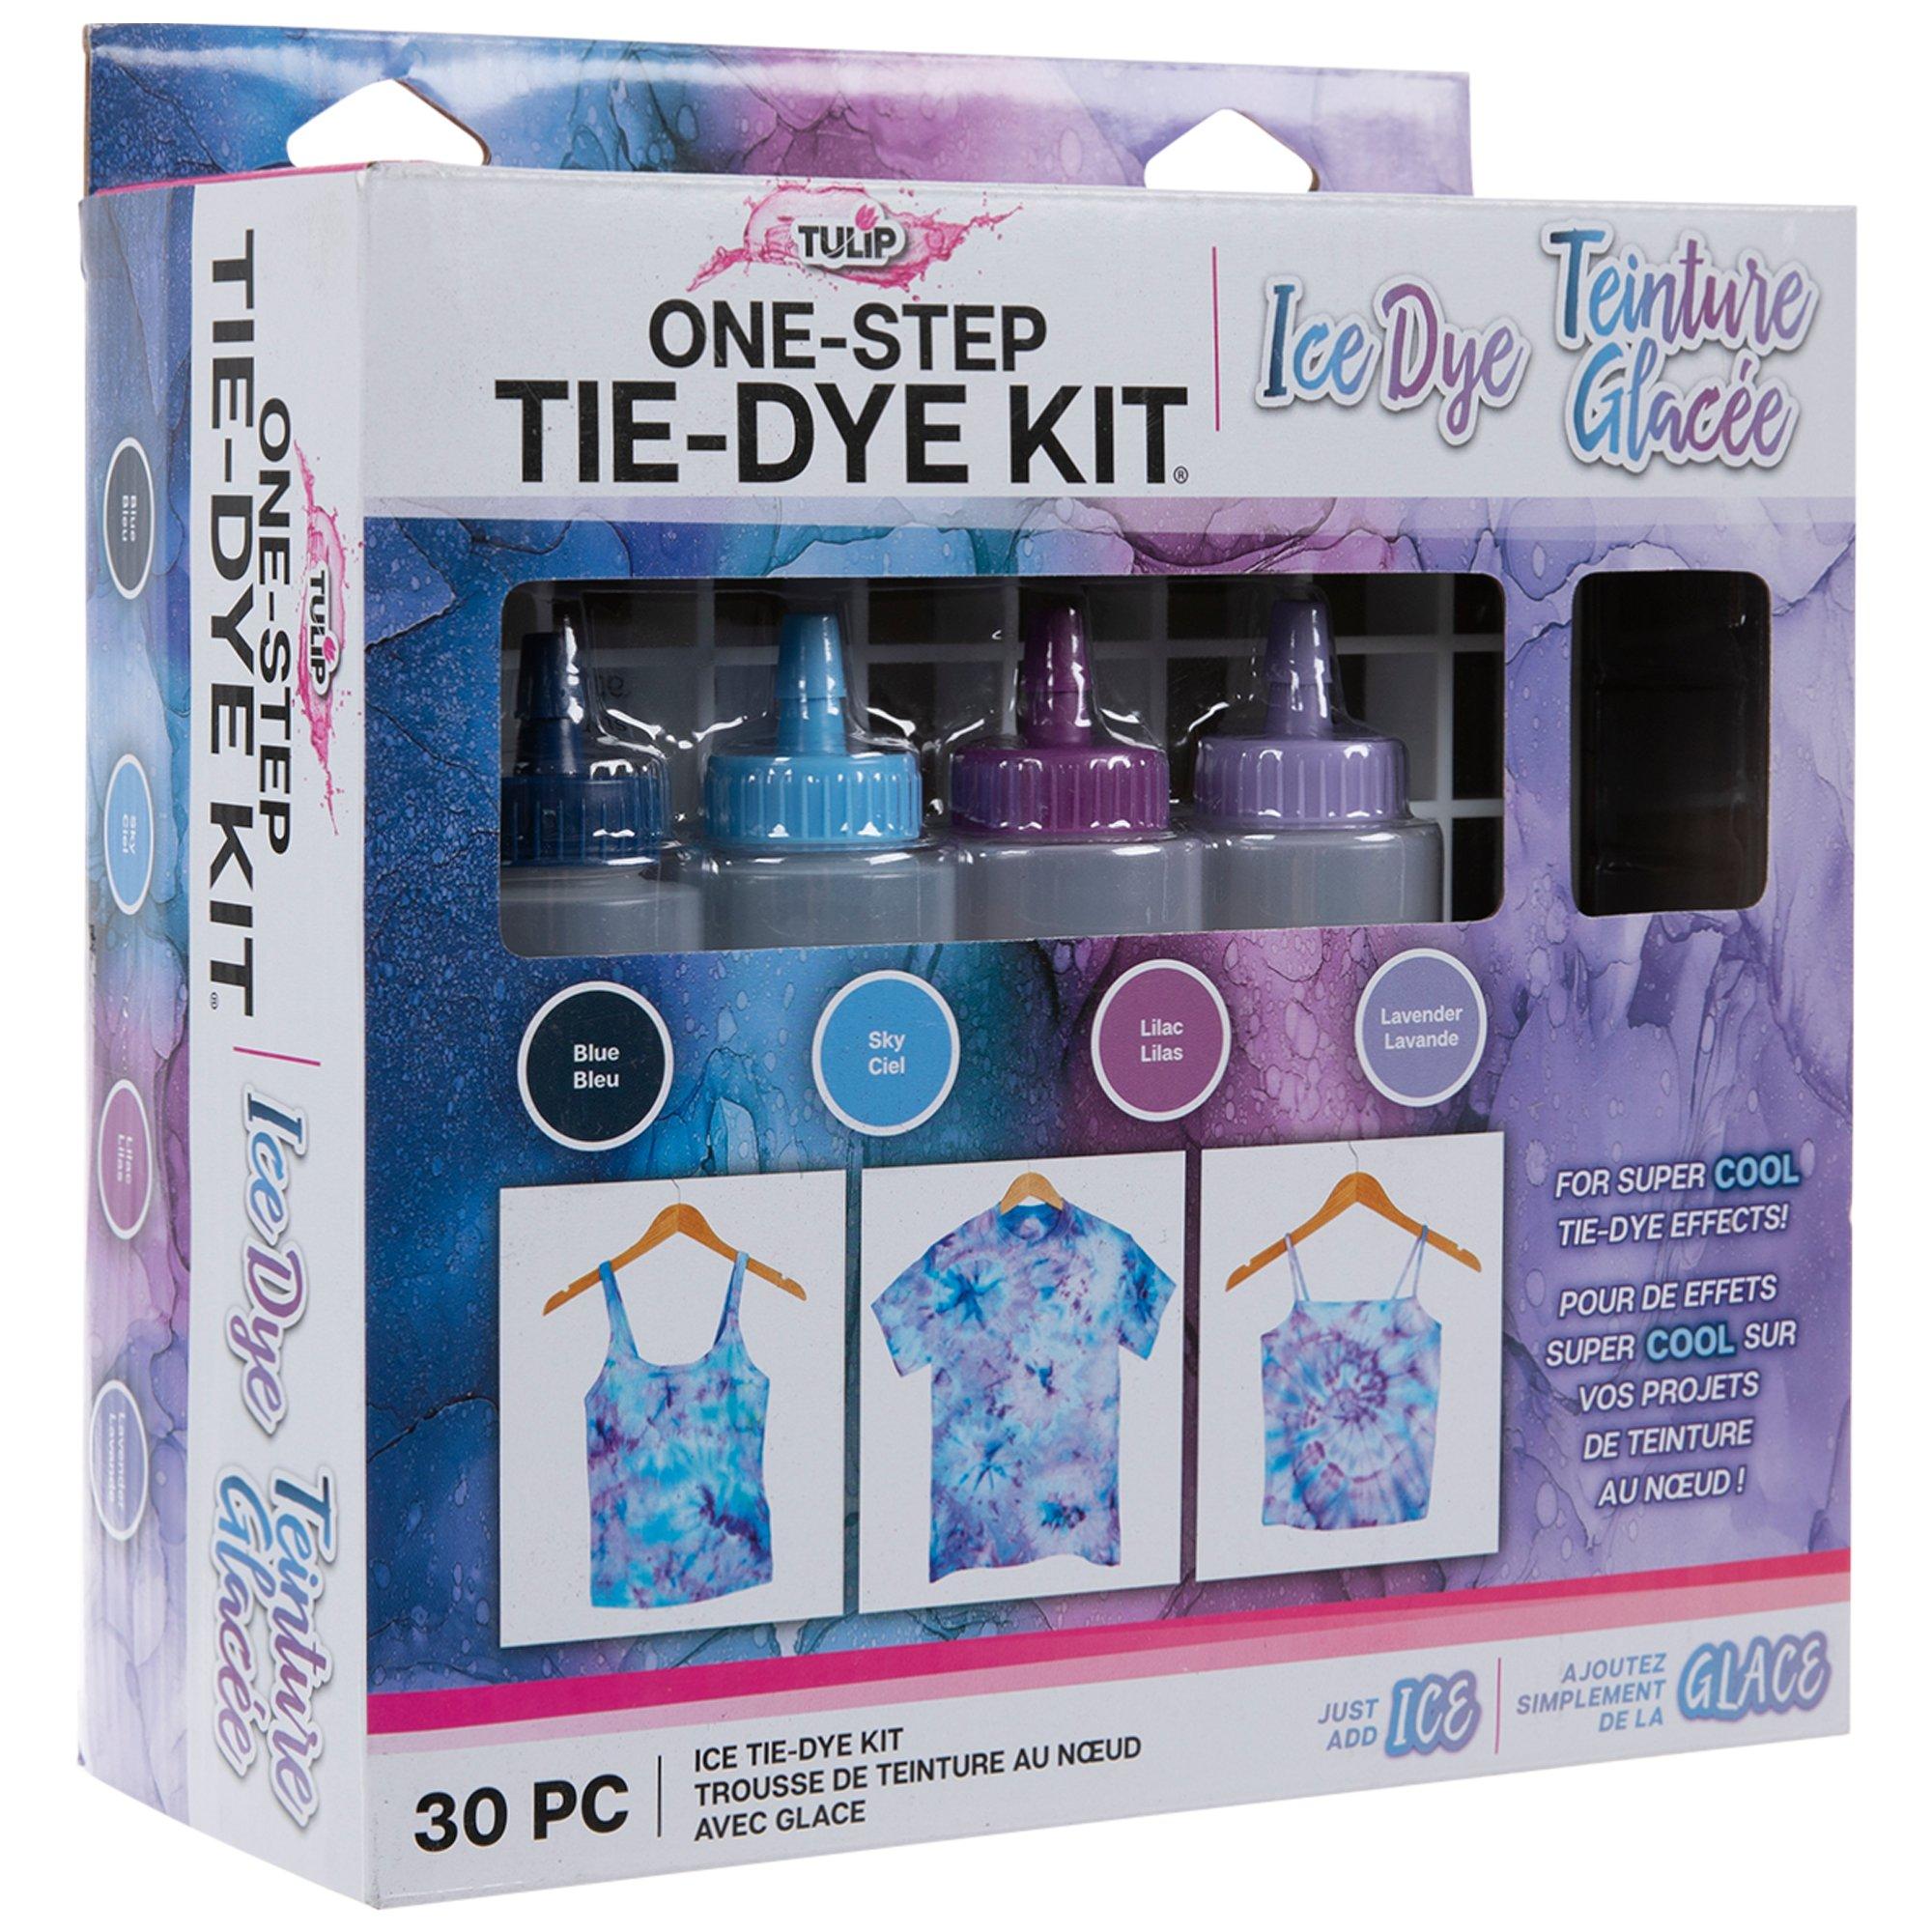 One-Step Tie-Dye Party Kit, Hobby Lobby